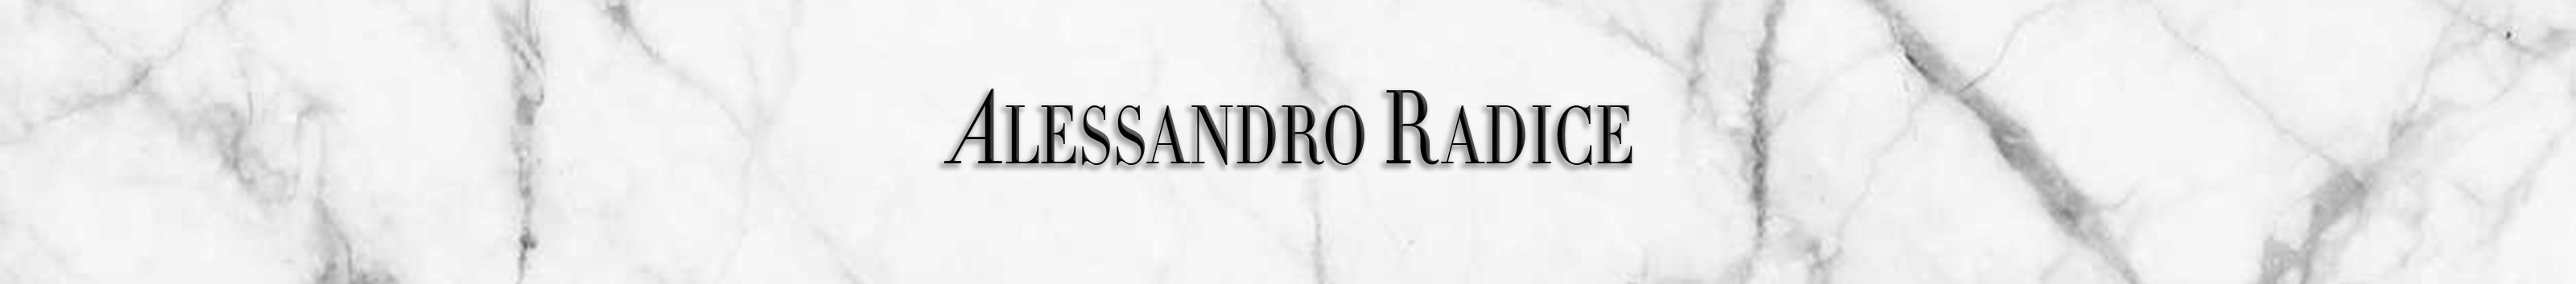 Alessandro Radice's profile banner